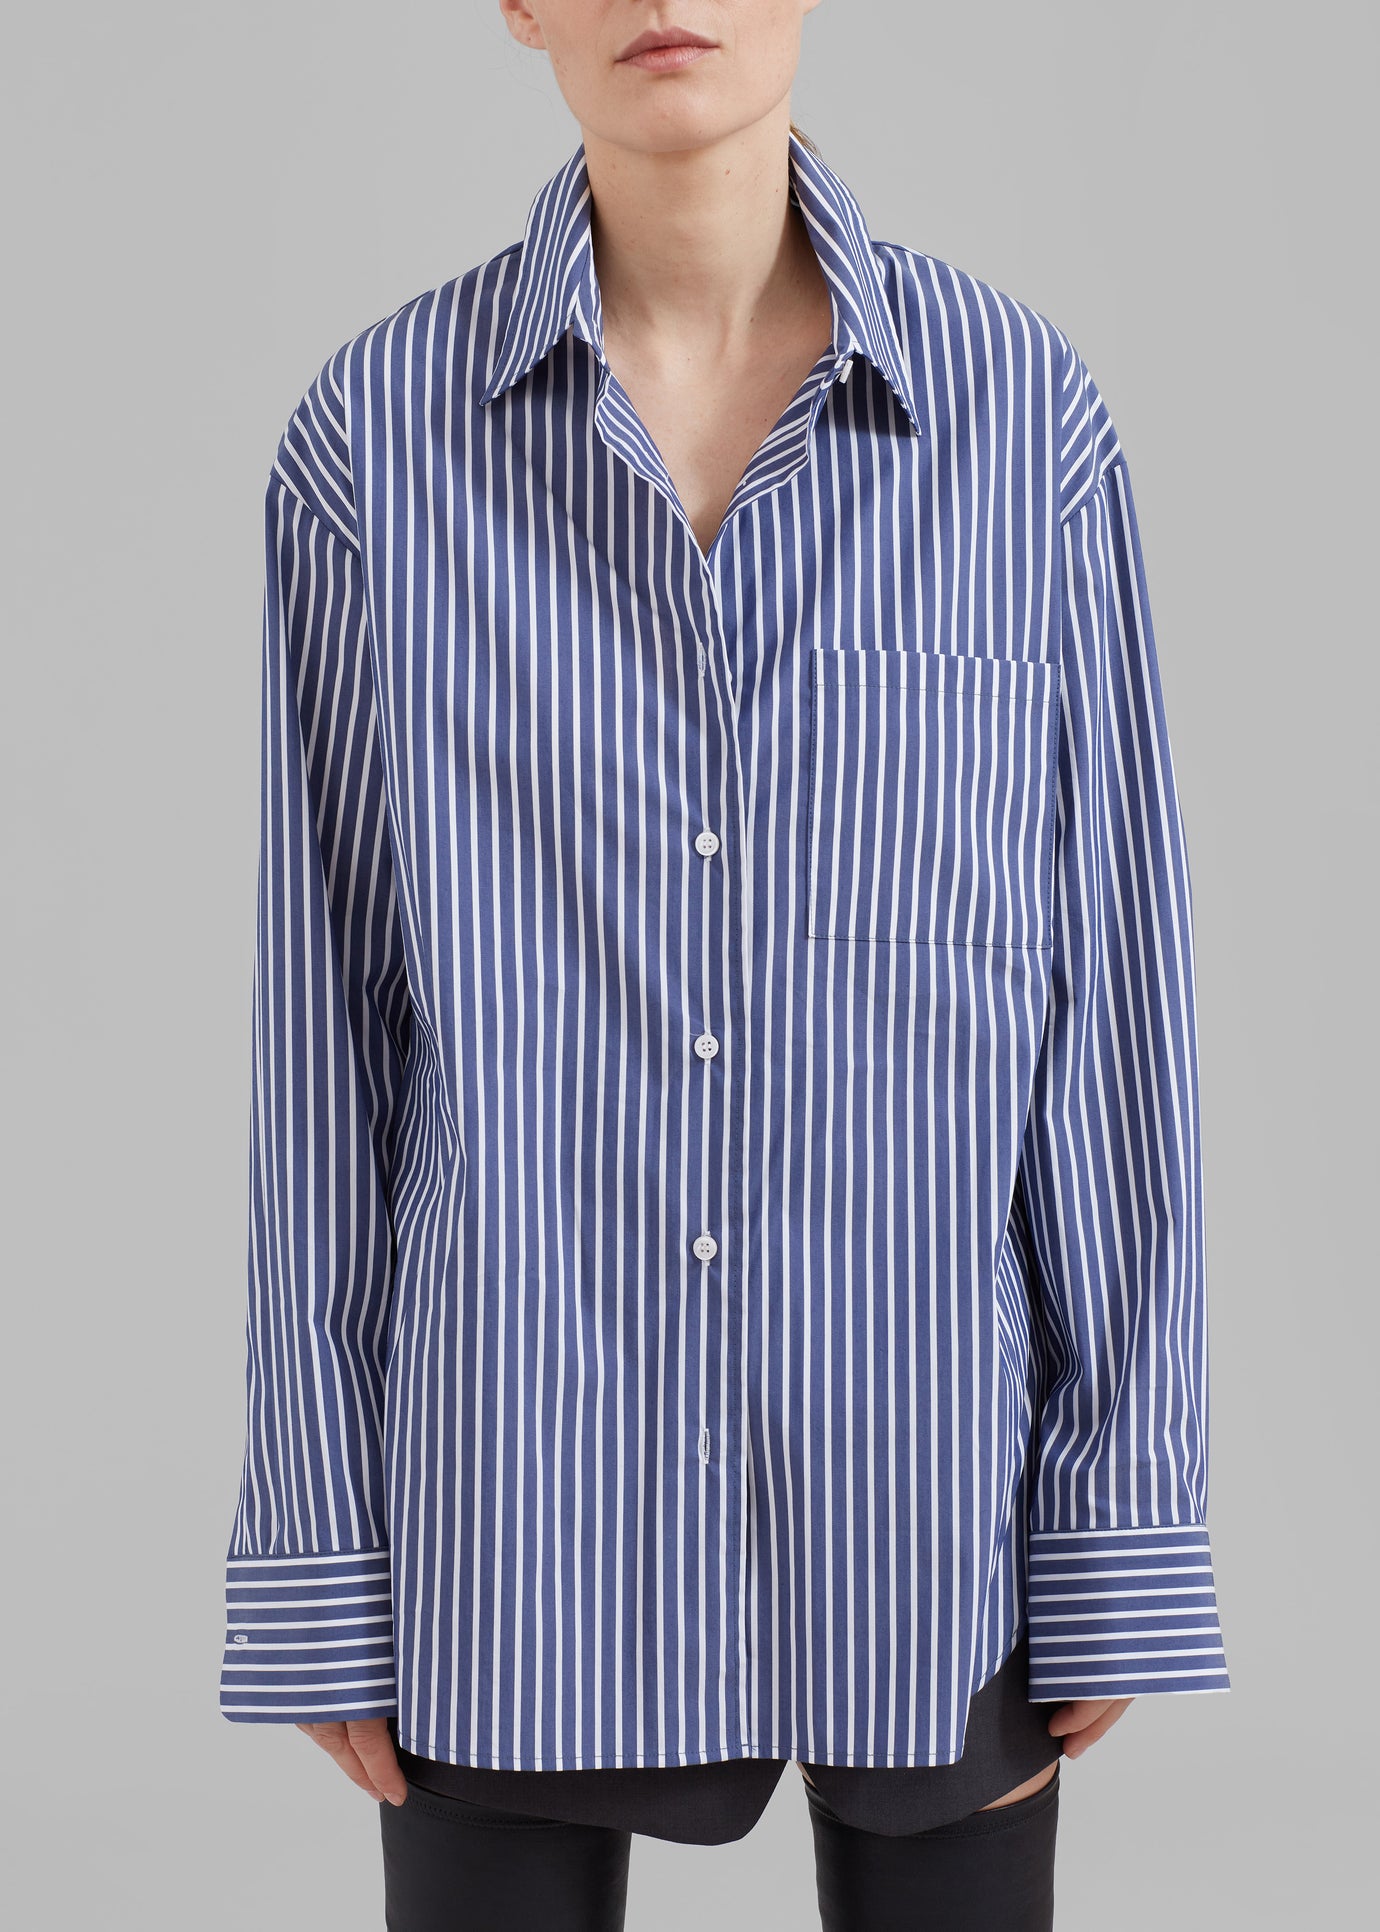 Lui Thin Stripe Shirt - Navy Stripe - 1